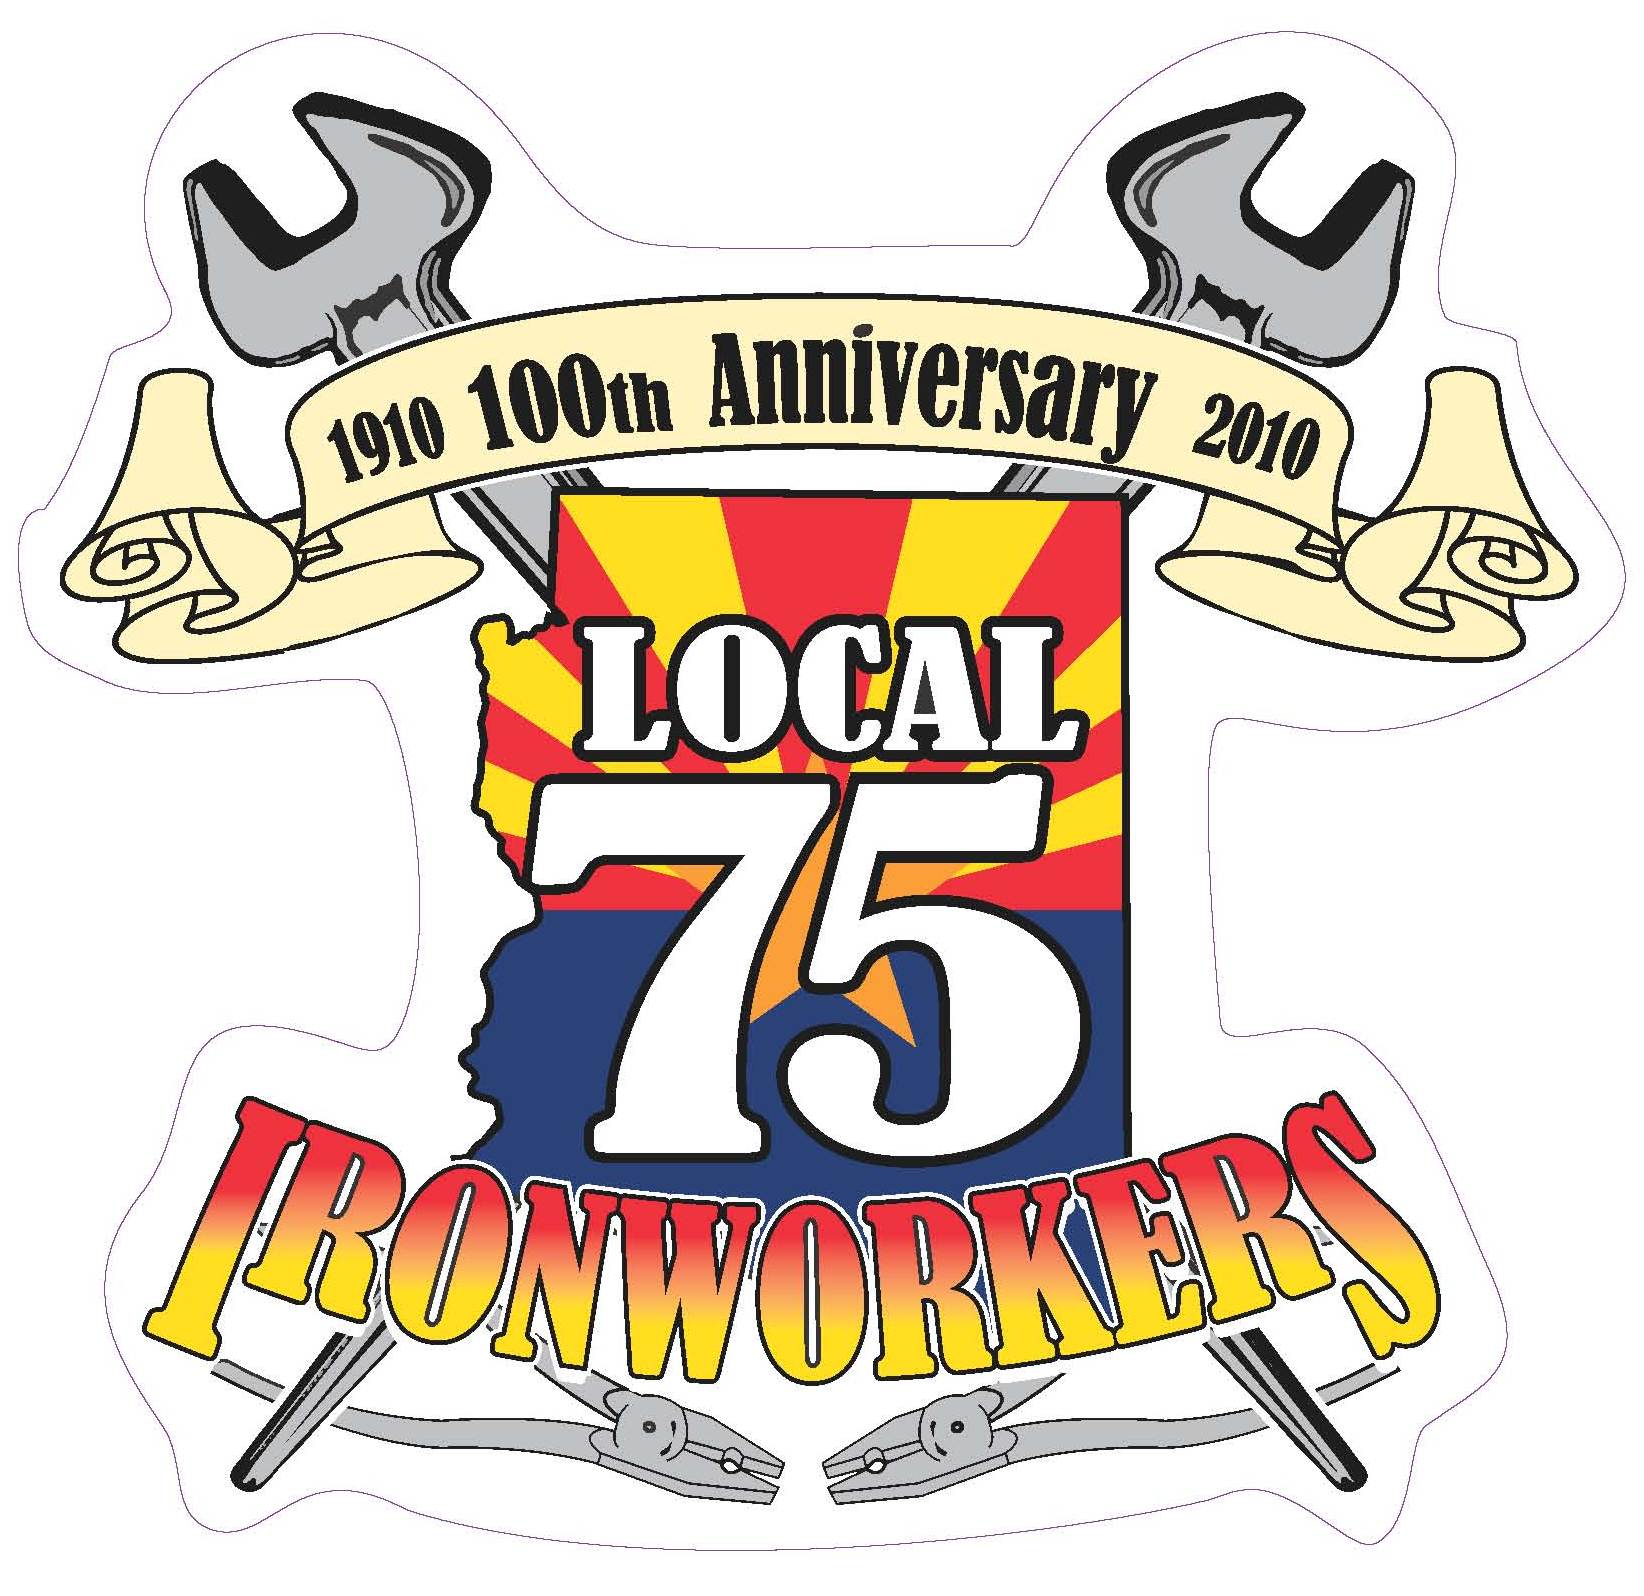 Arizona Strong Logo - Ironworkers Local 75